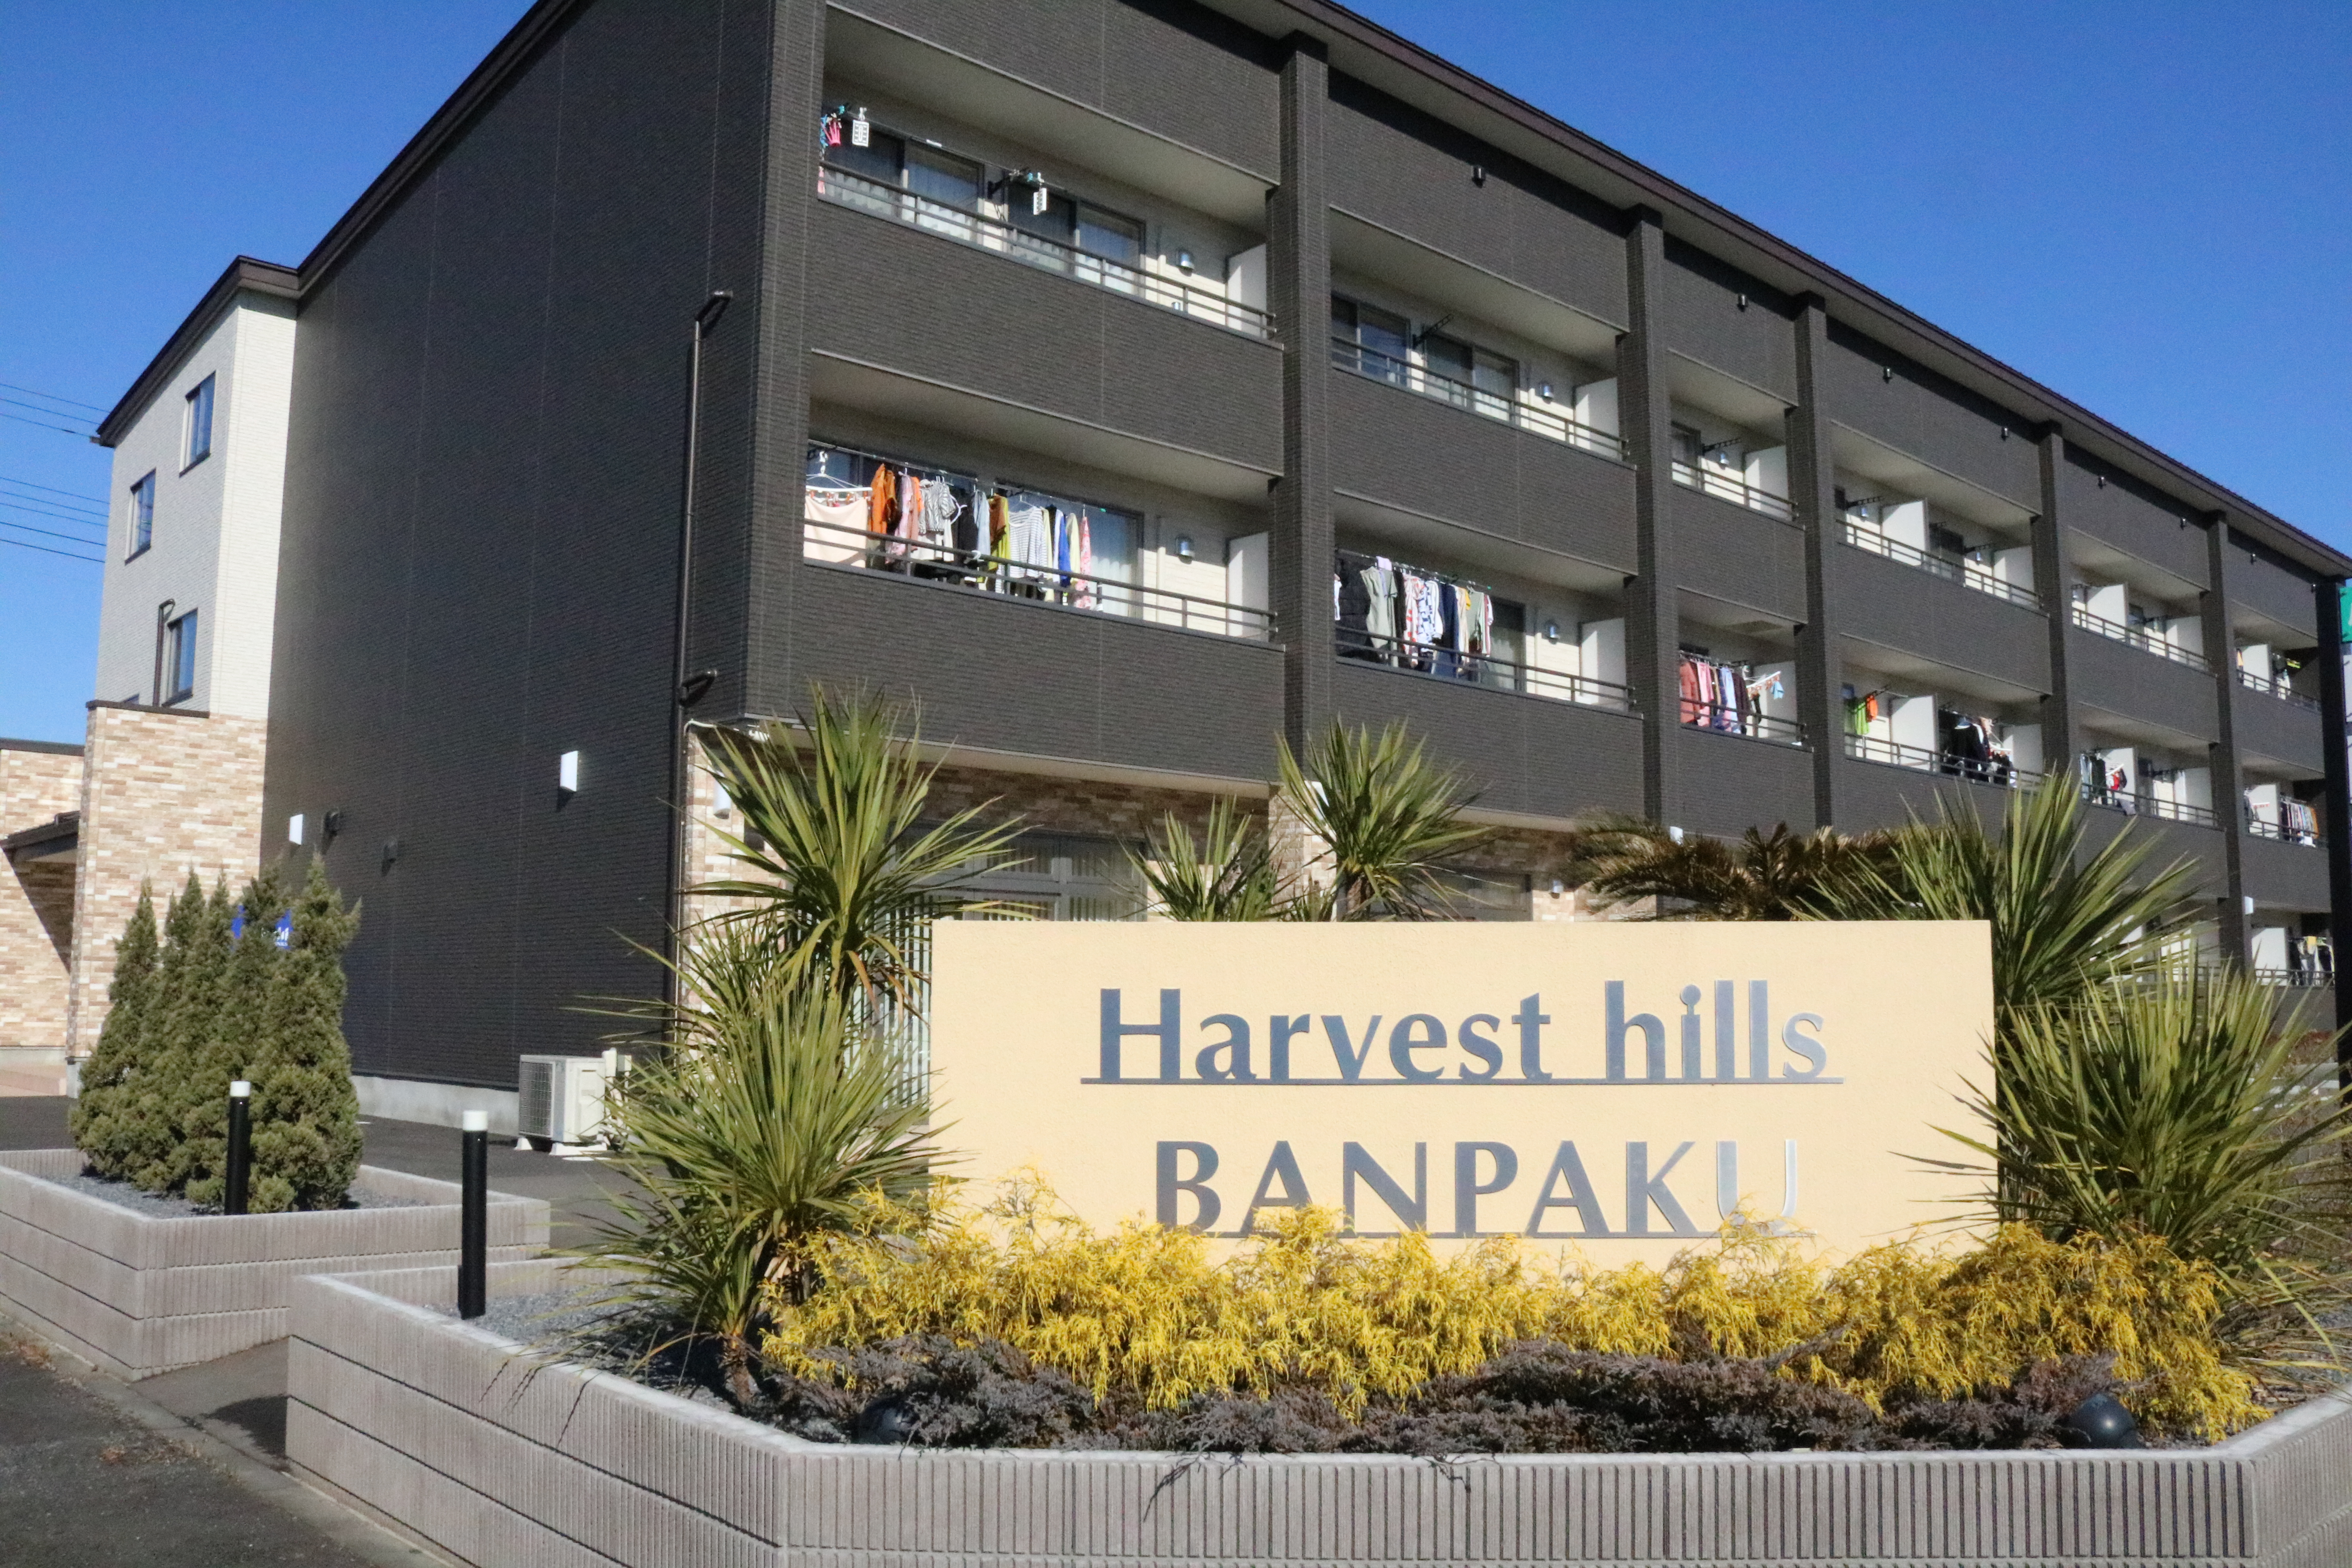 Harvest hills BANPAKU